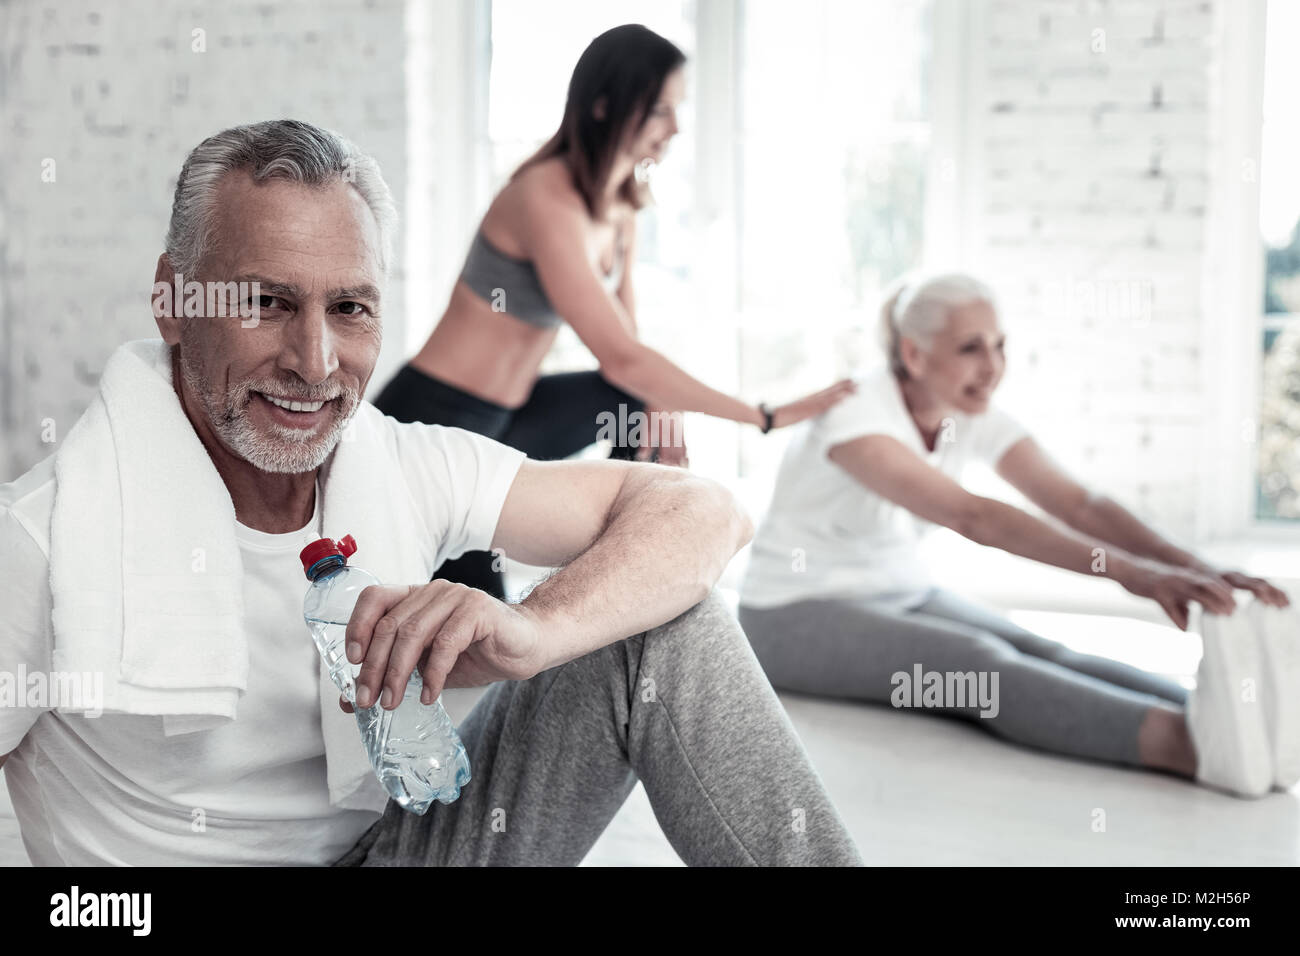 https://c8.alamy.com/comp/M2H56P/confident-elderly-man-drinking-water-after-gym-session-M2H56P.jpg